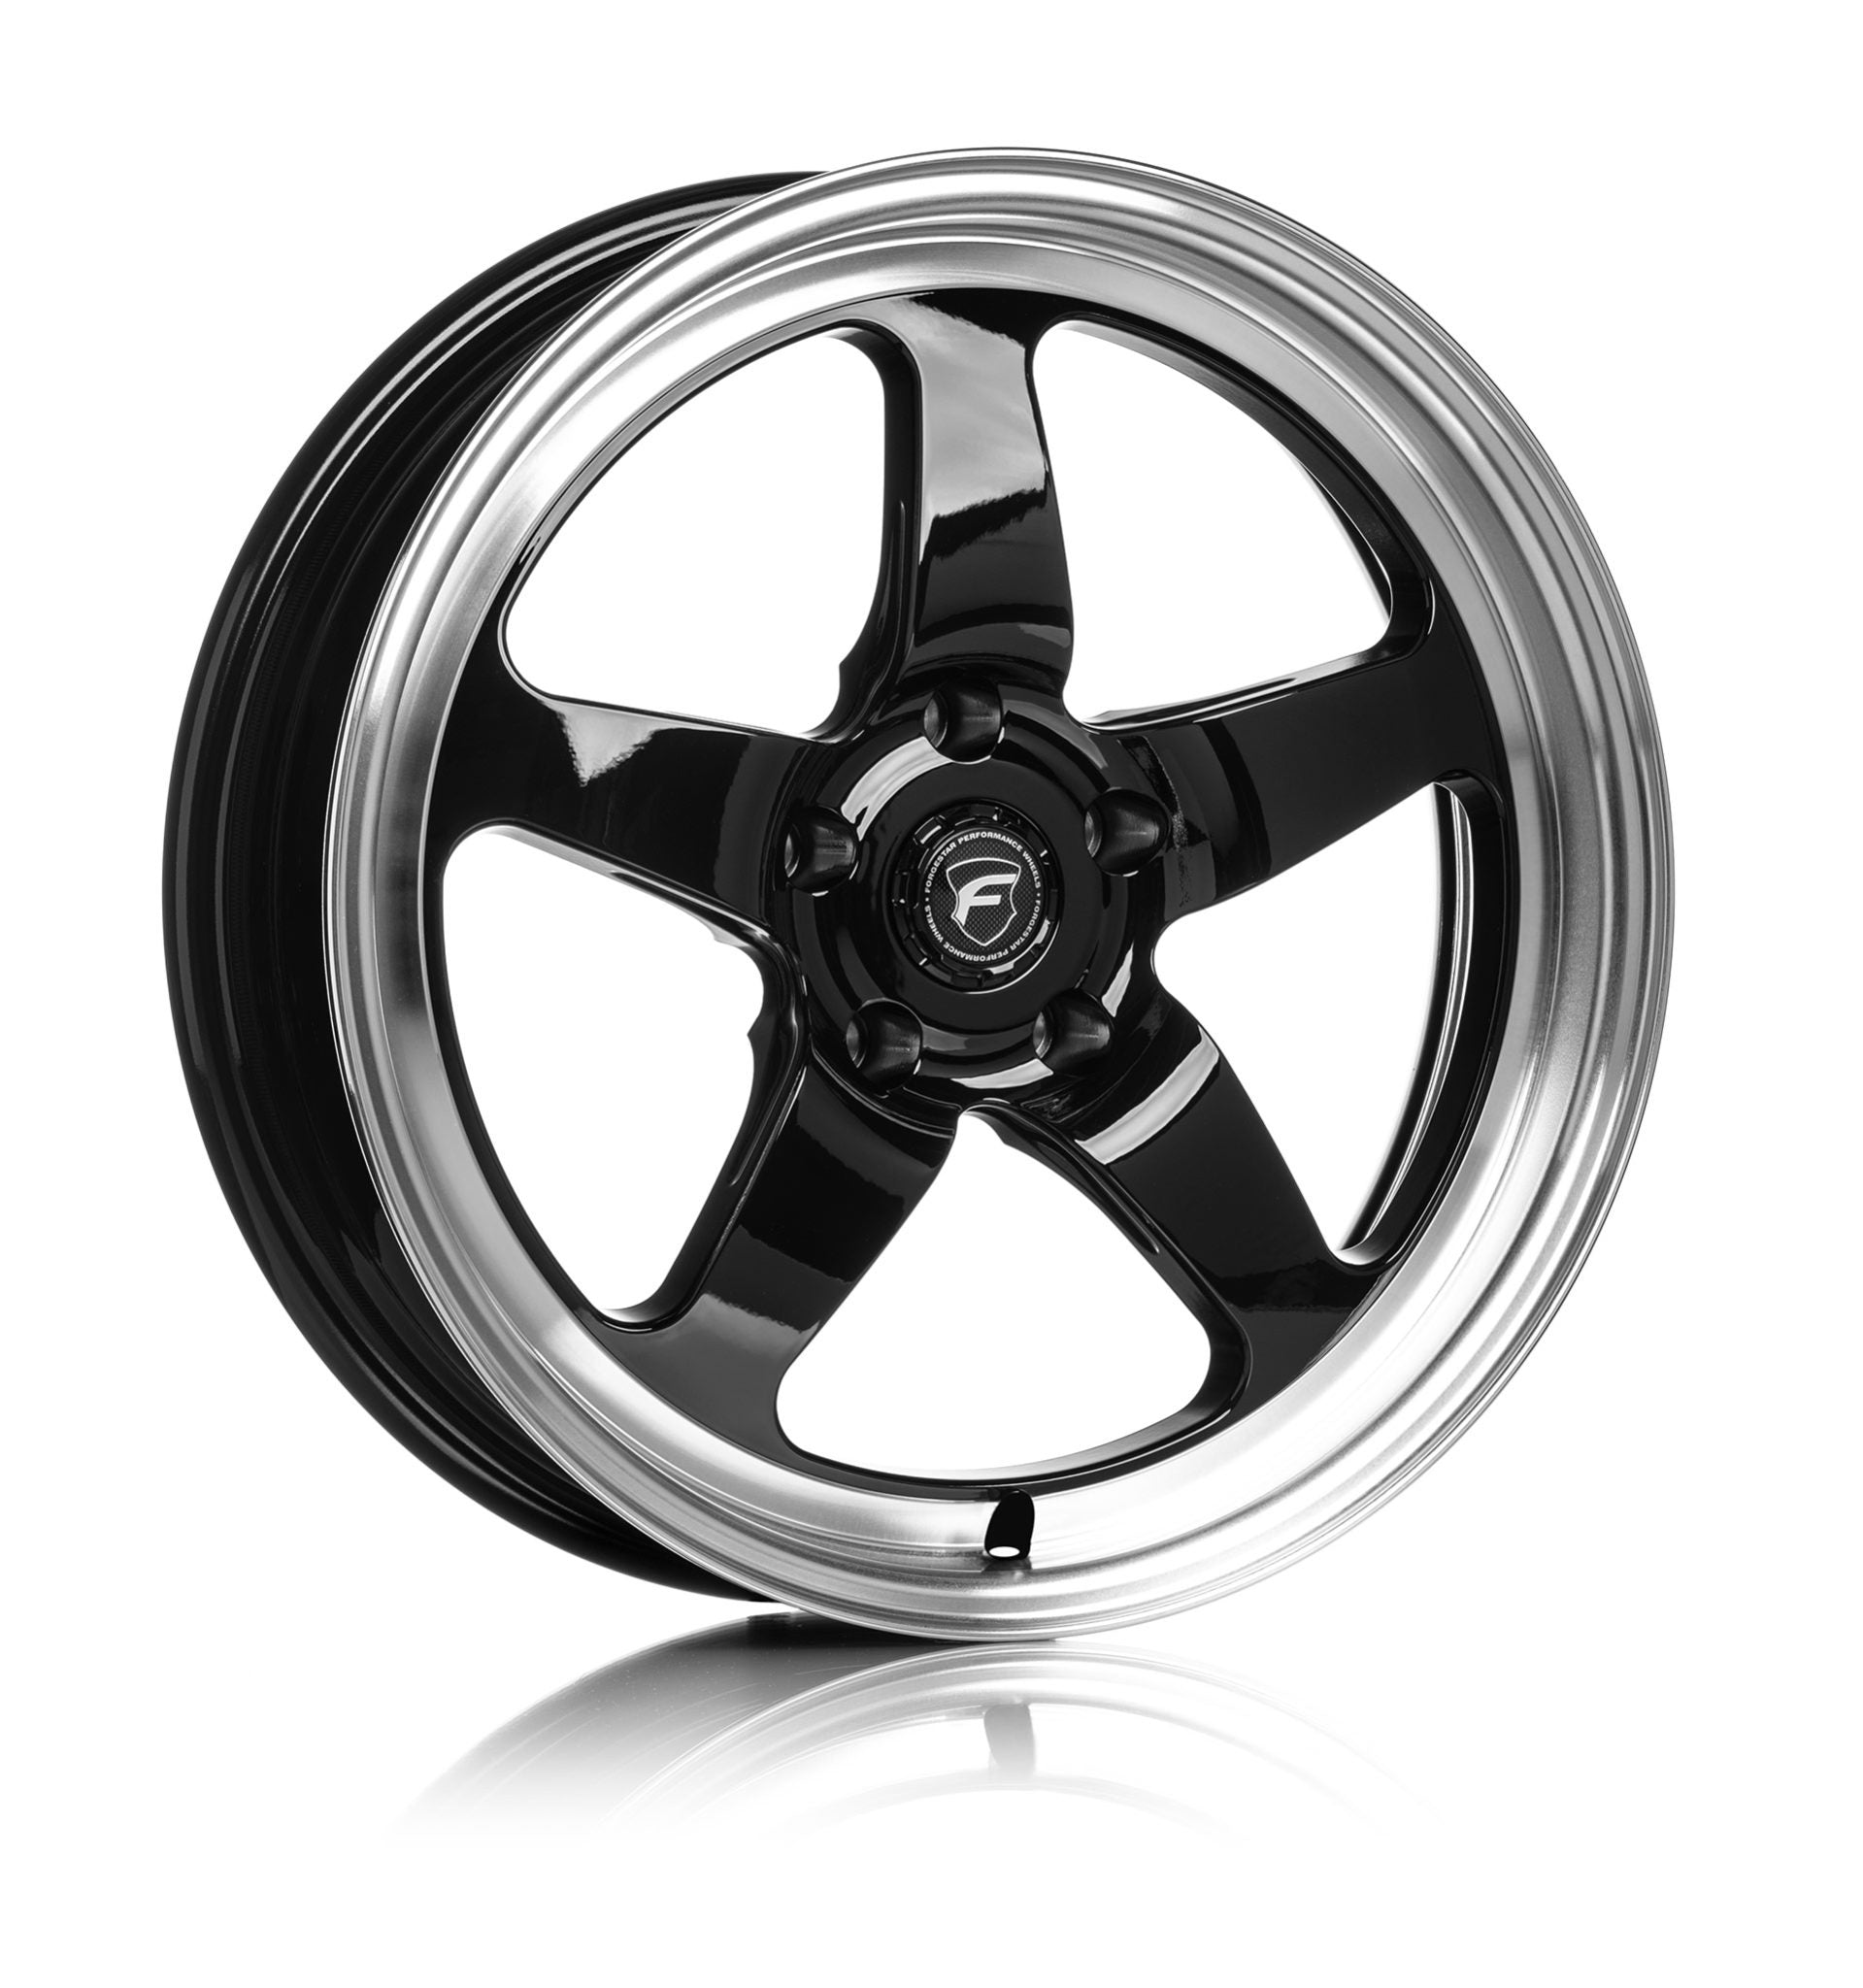 Forgestar D5 Drag Racing Wheels - Gloss Black w/Machined Lip - 17x4.5 - Sold Individually - Motorsports LA